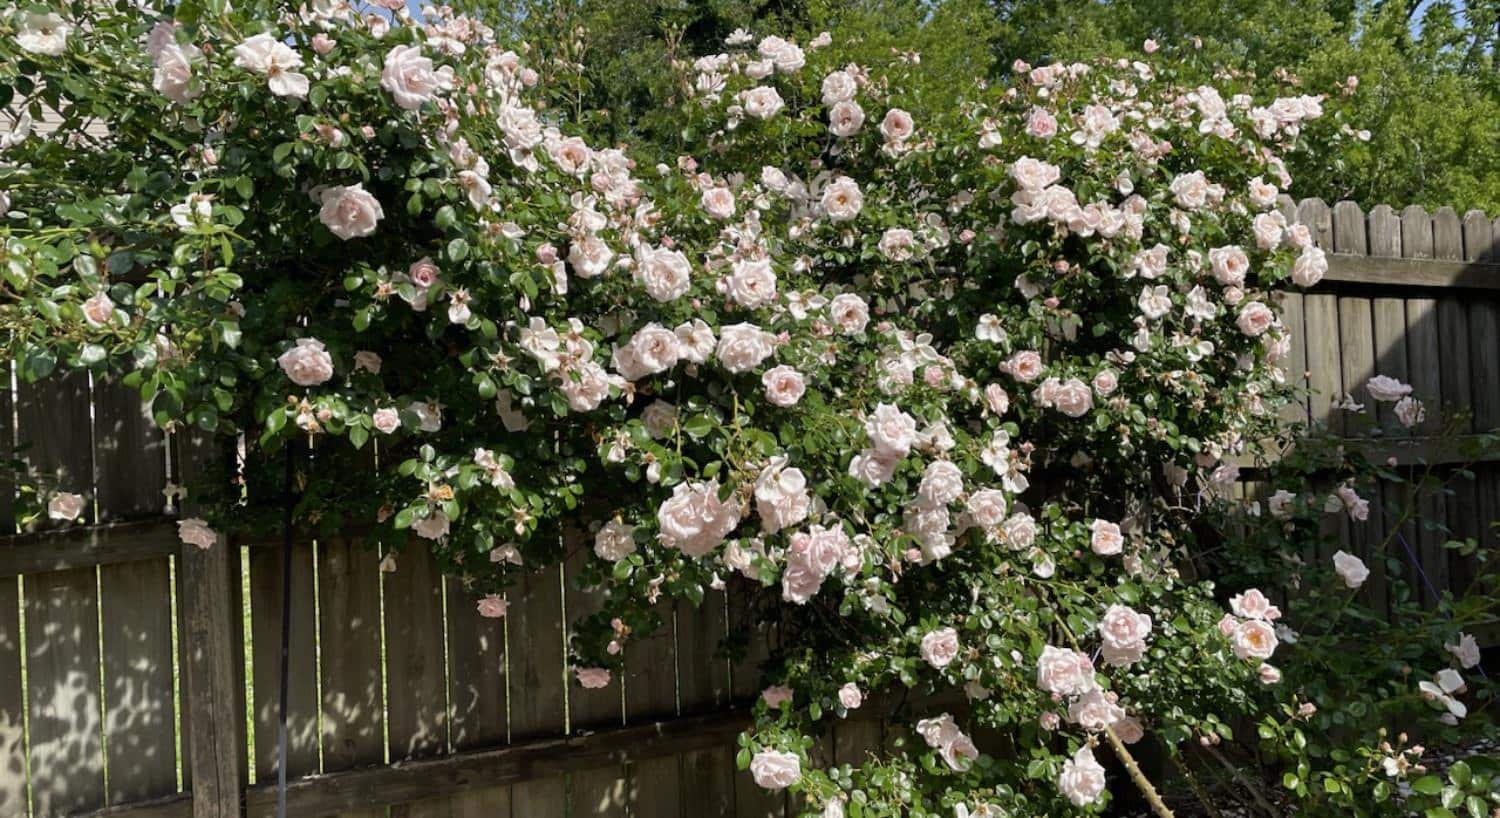 Close up view of large light pink rose bush